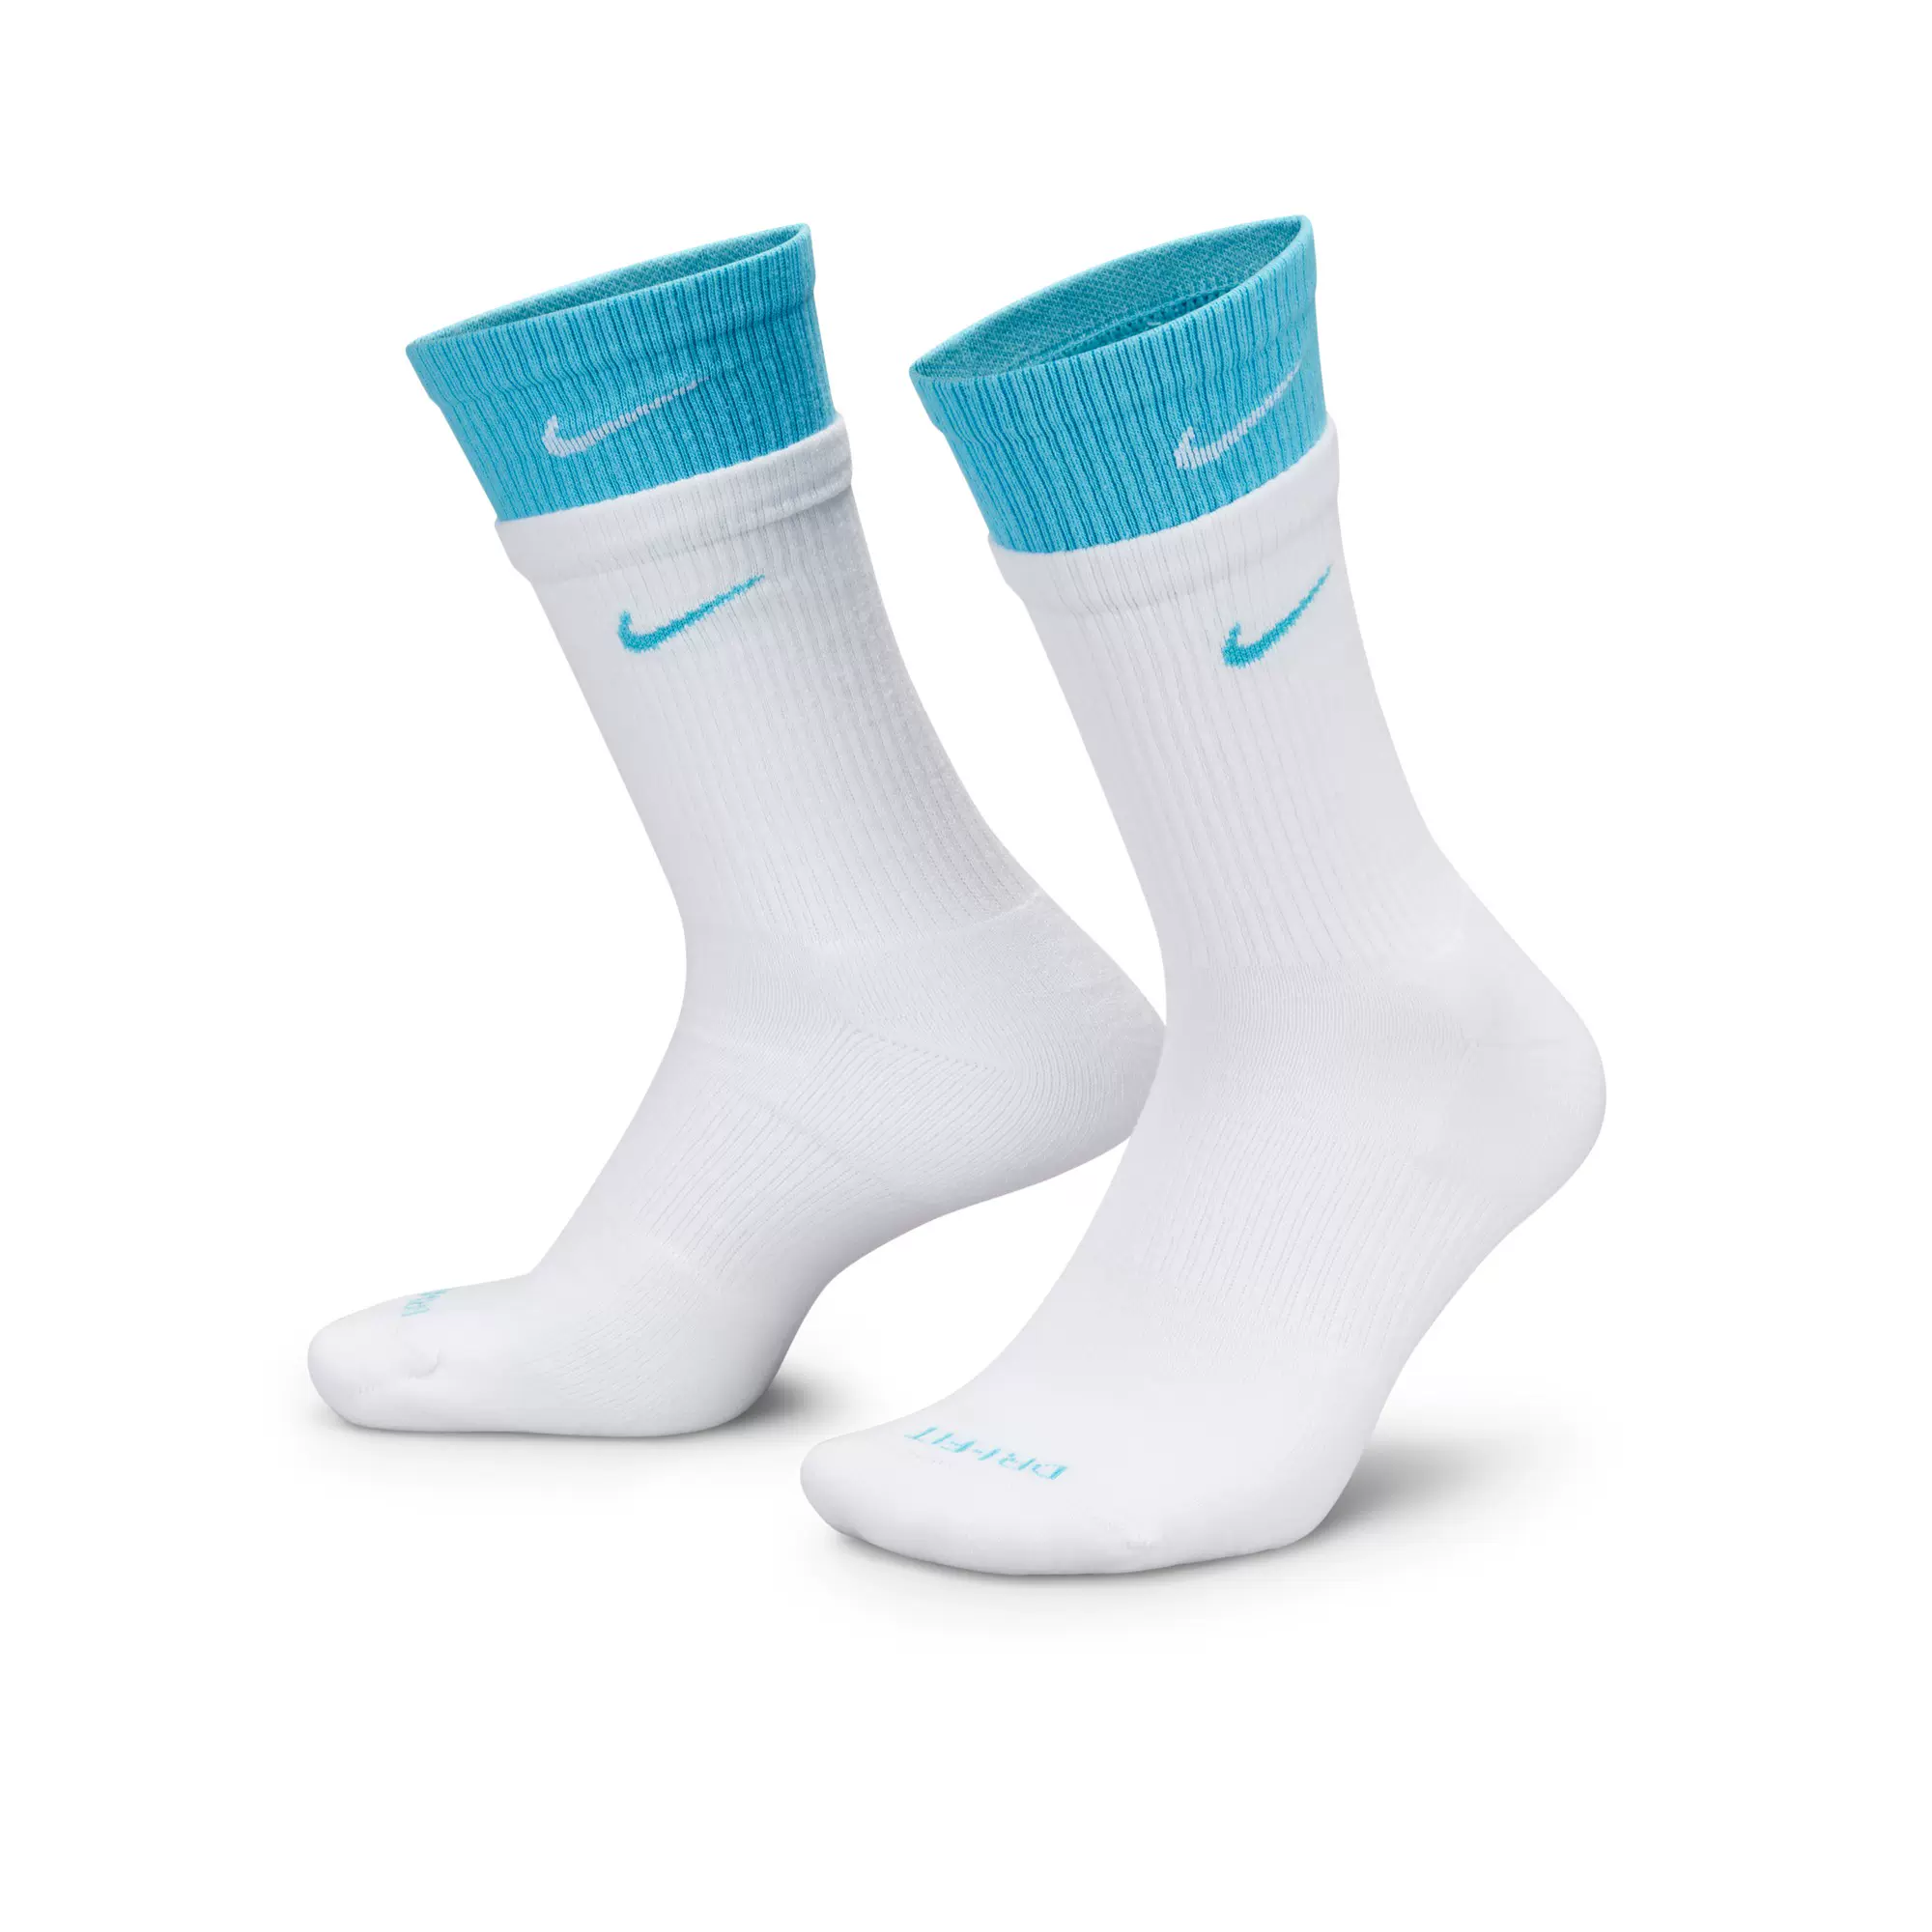 Nike cotton stitching sports socks 1 pair